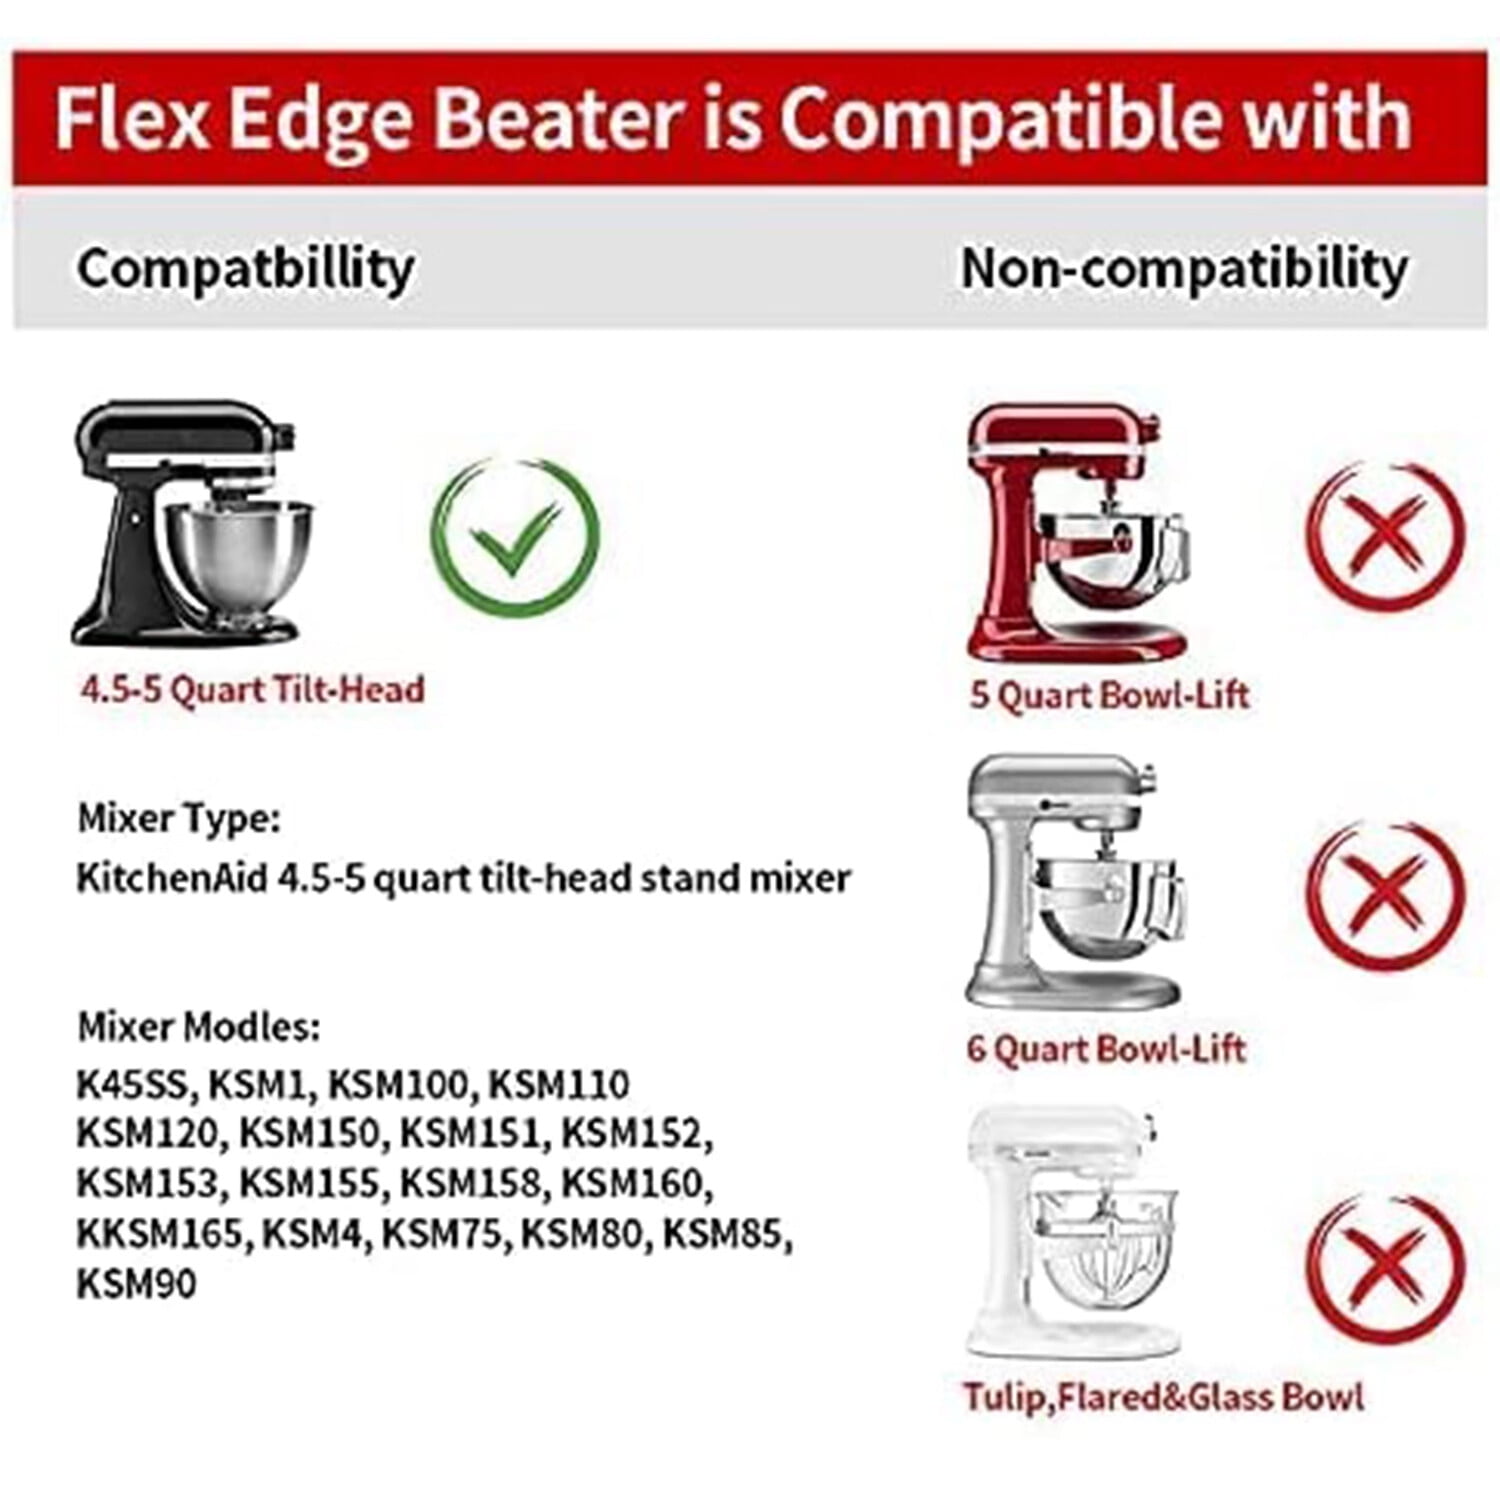 Vonter Flex Edge Beater for Kitchenaid,Kitchen Aid Mixer Accessory,Kitchen Aid Attachments for Mixer,Fits Tilt-Head Stand Mixer Bowls for 6-Quart